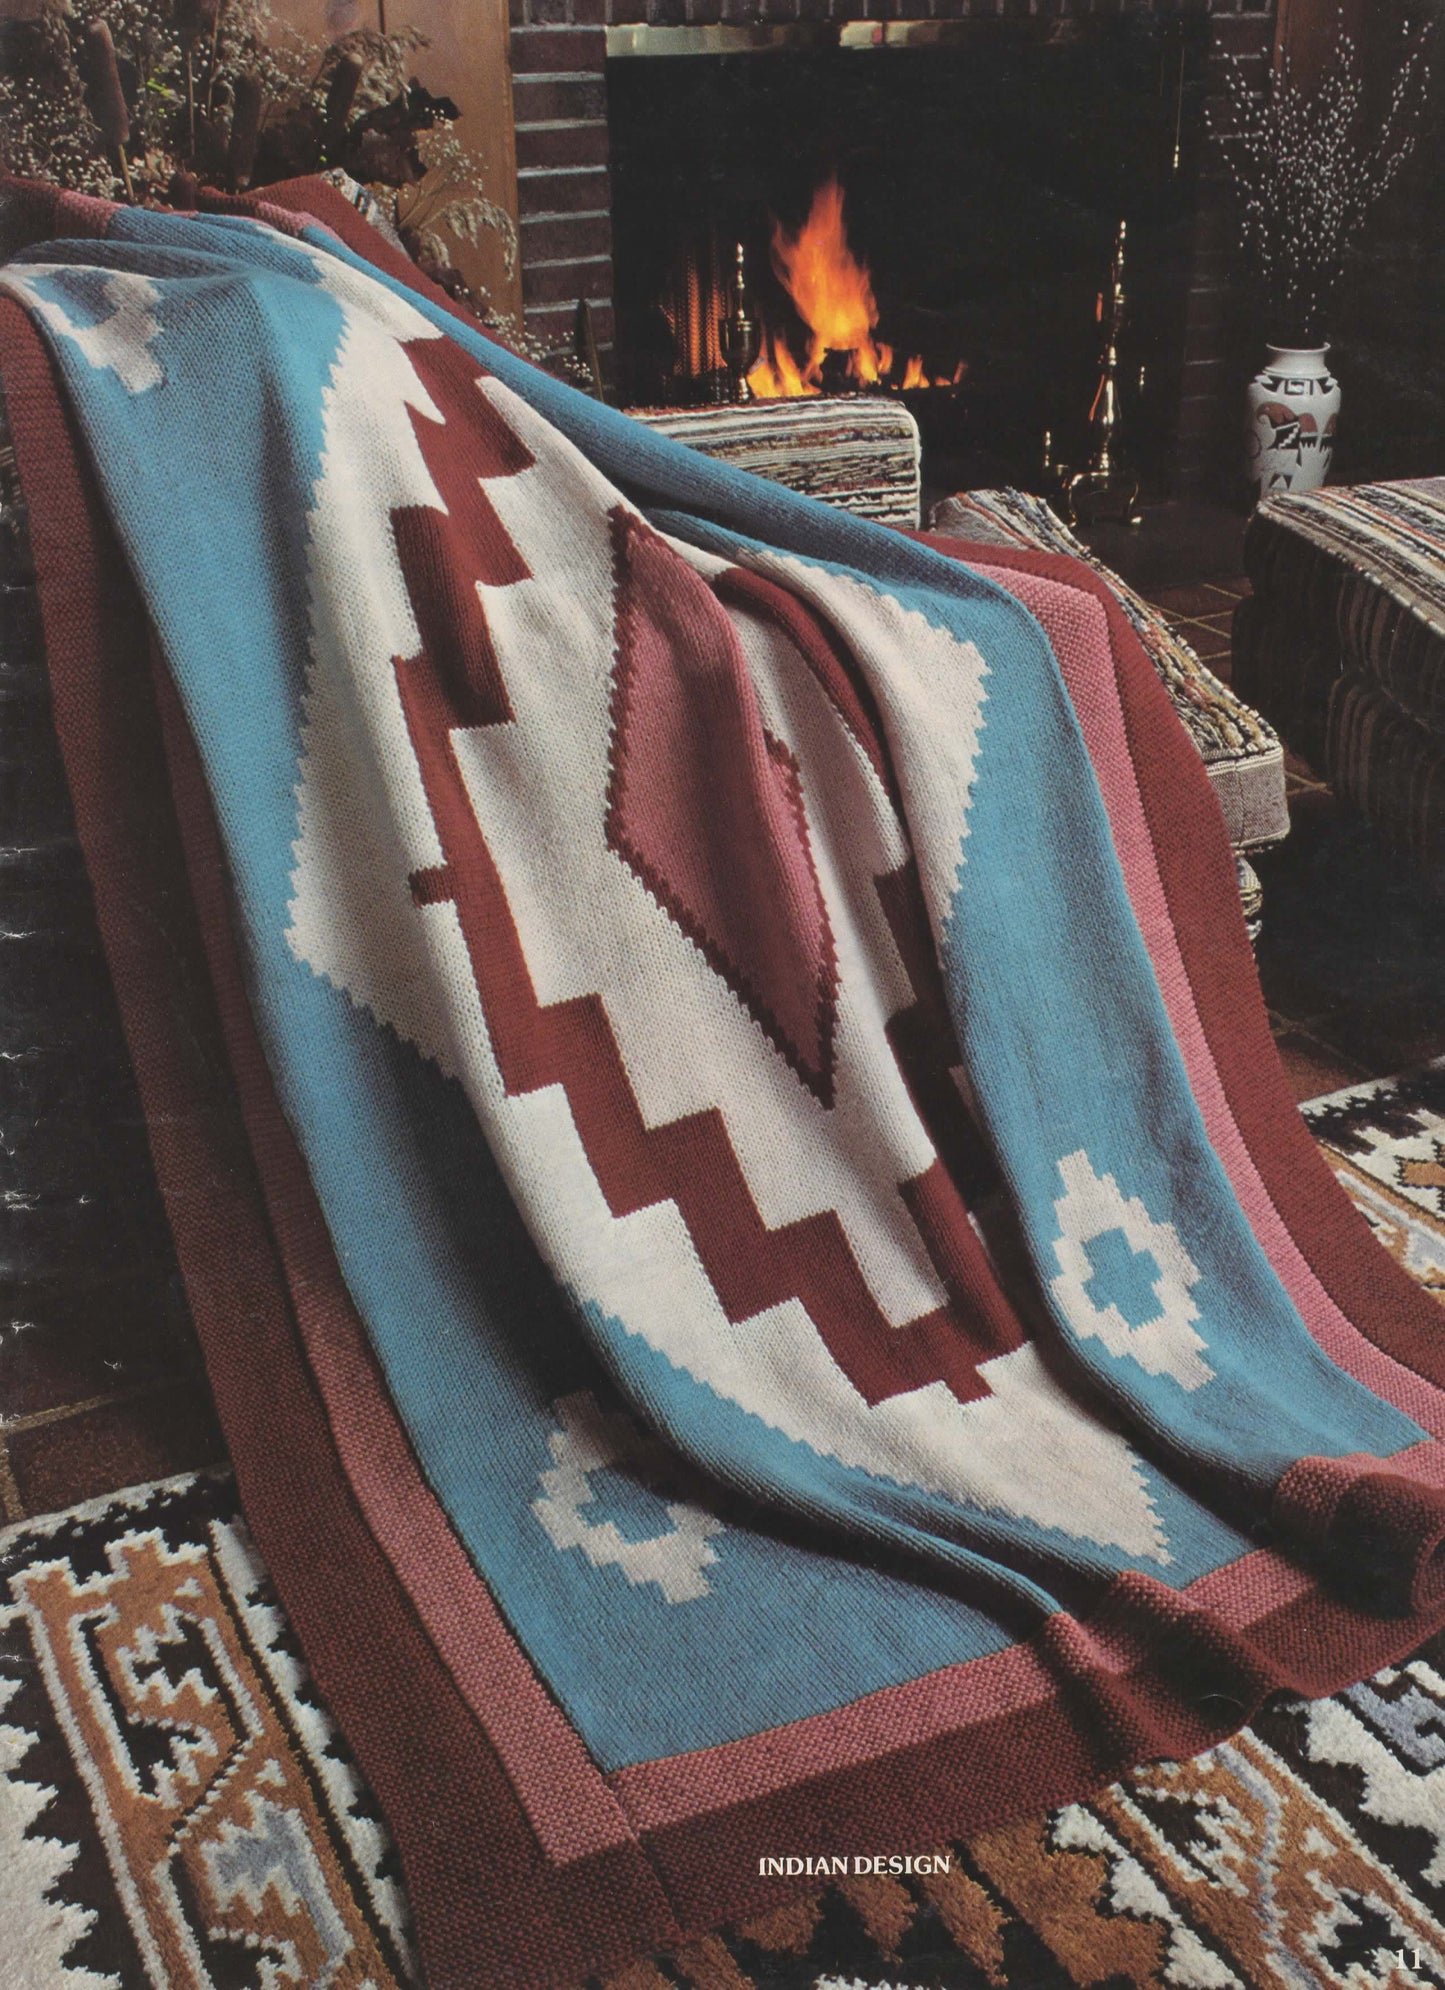 Vintage Knit Afghan Pattern Indian Design Native American Downloadable PDF - At Grandma's Table